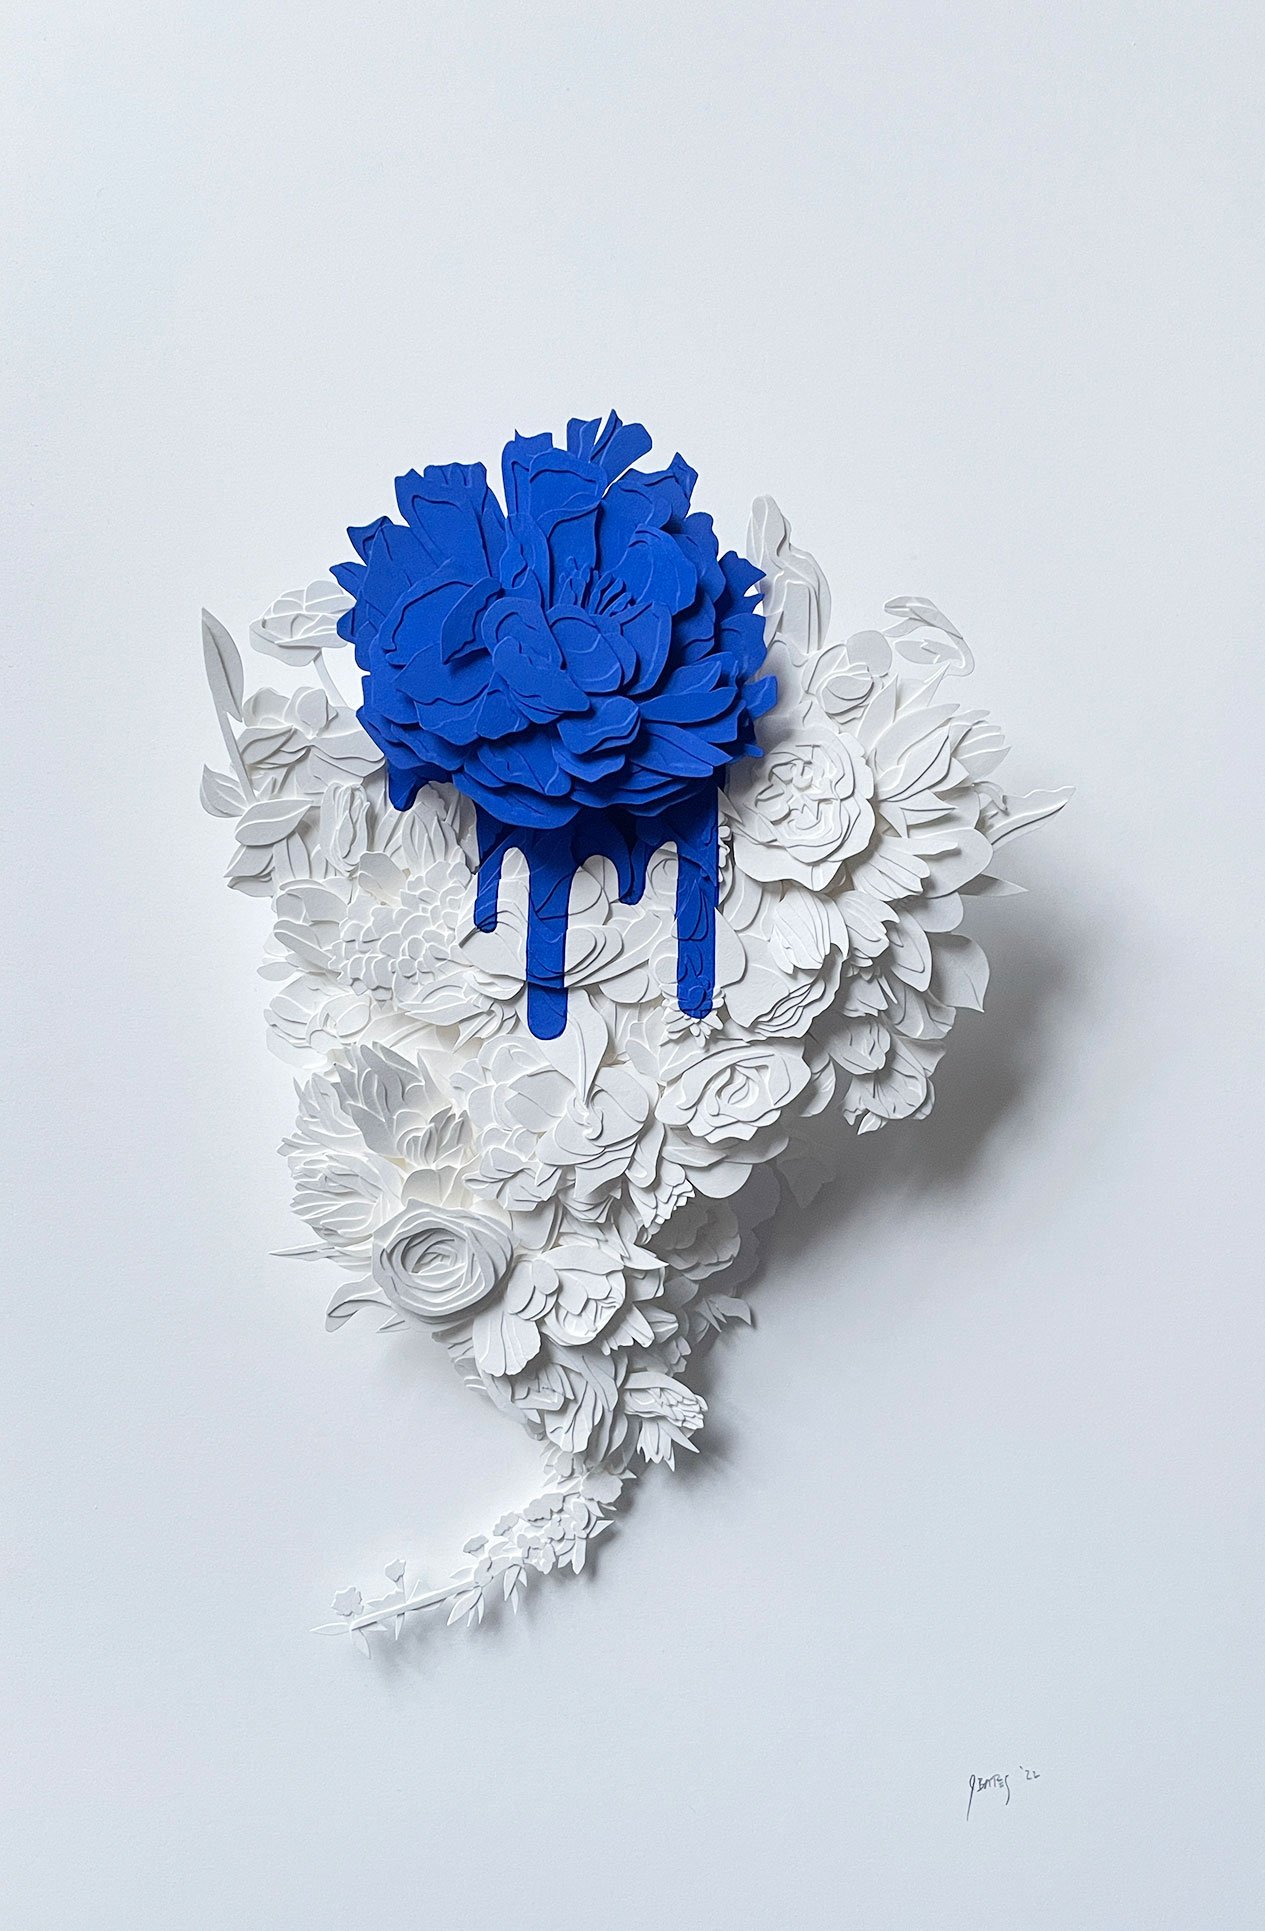 joey-bates-paper-art-sculpture-commission-2.jpg